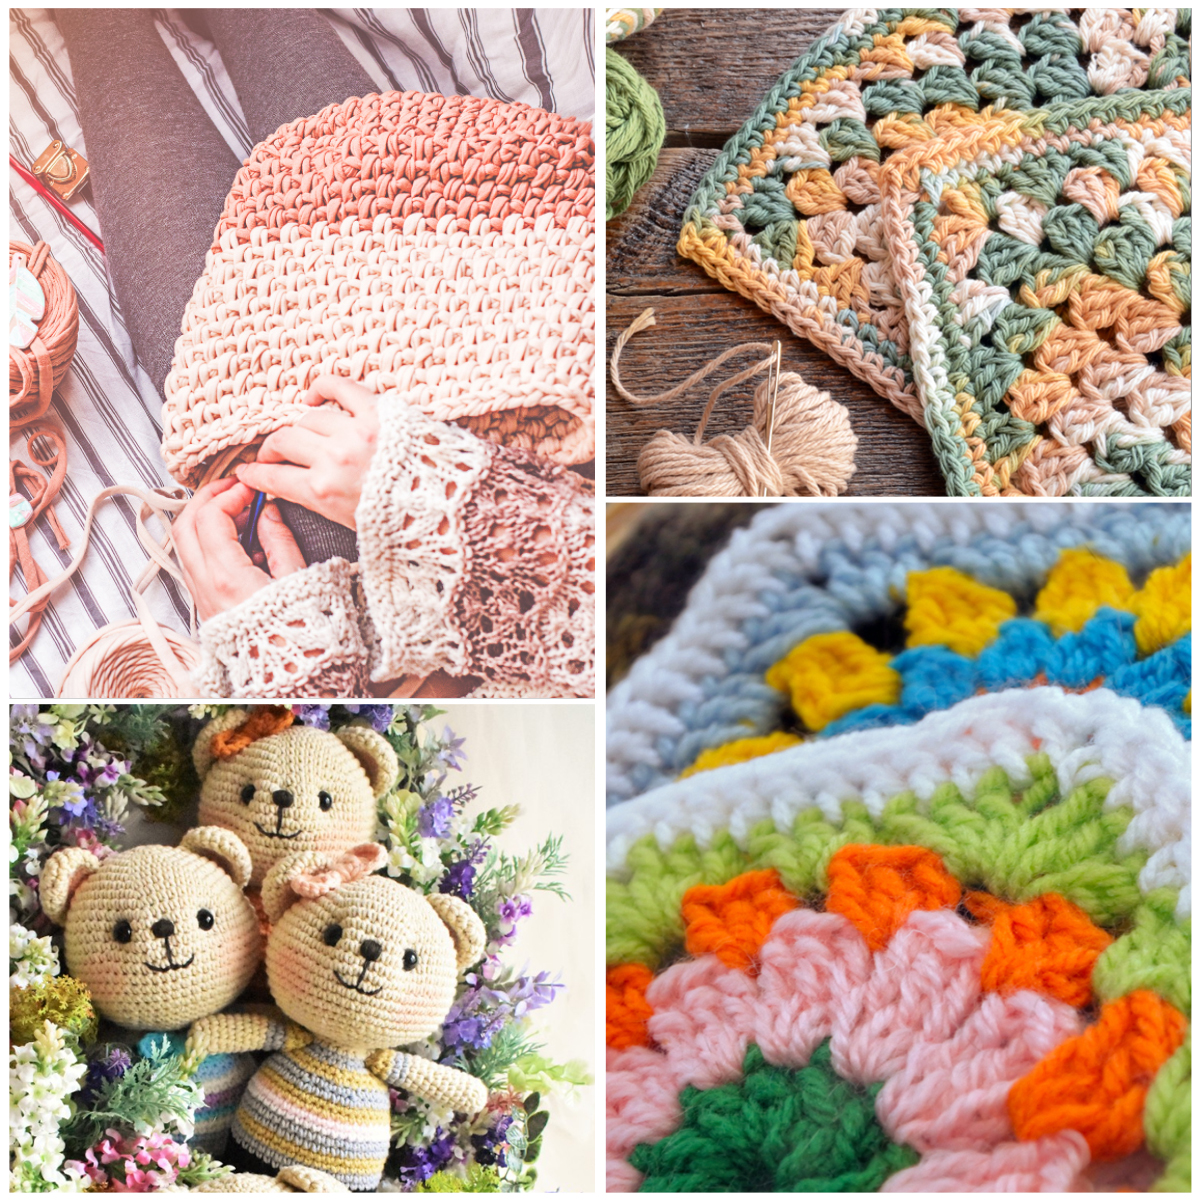 Toorise Crochet Kits for Beginners,Colorful Crochet Hook Set with Storage,Accessories Ergonomic Crochet Kit,Starter Pack for Kids Adults, Beginner